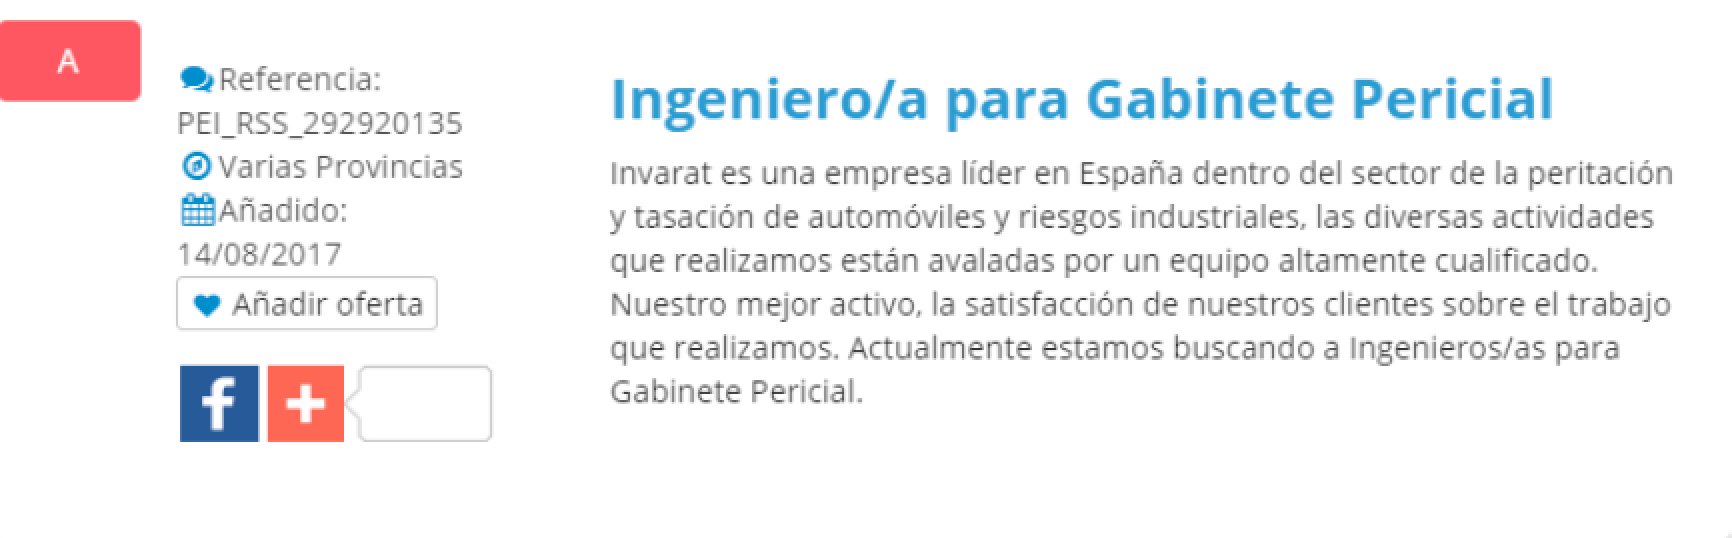 ProempleoIngenieros.es #empleo Ingeniero/a para gabinete pericial https://t.co/O2KMb5wtSj https://t.co/JNf0SMzXlp